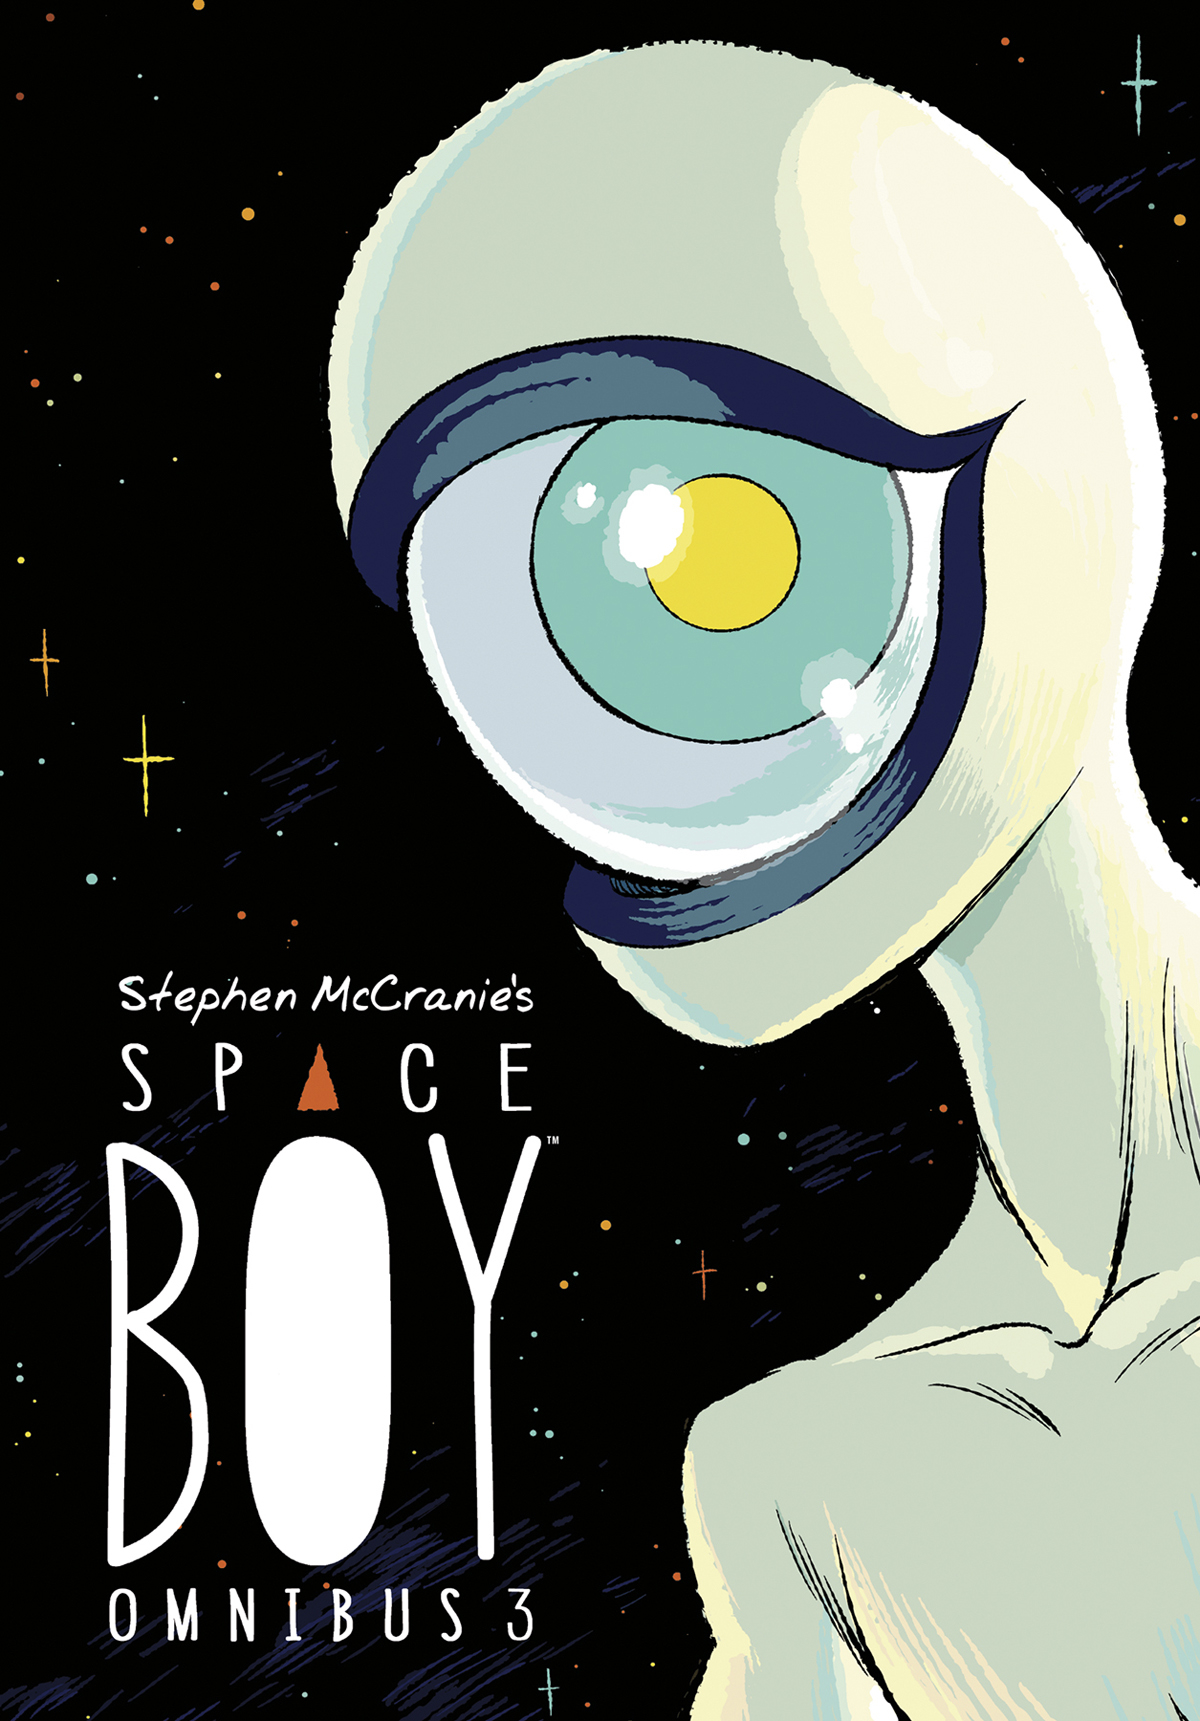 Stephen McCranie's Space Boy Omnibus Graphic Novel Volume 3